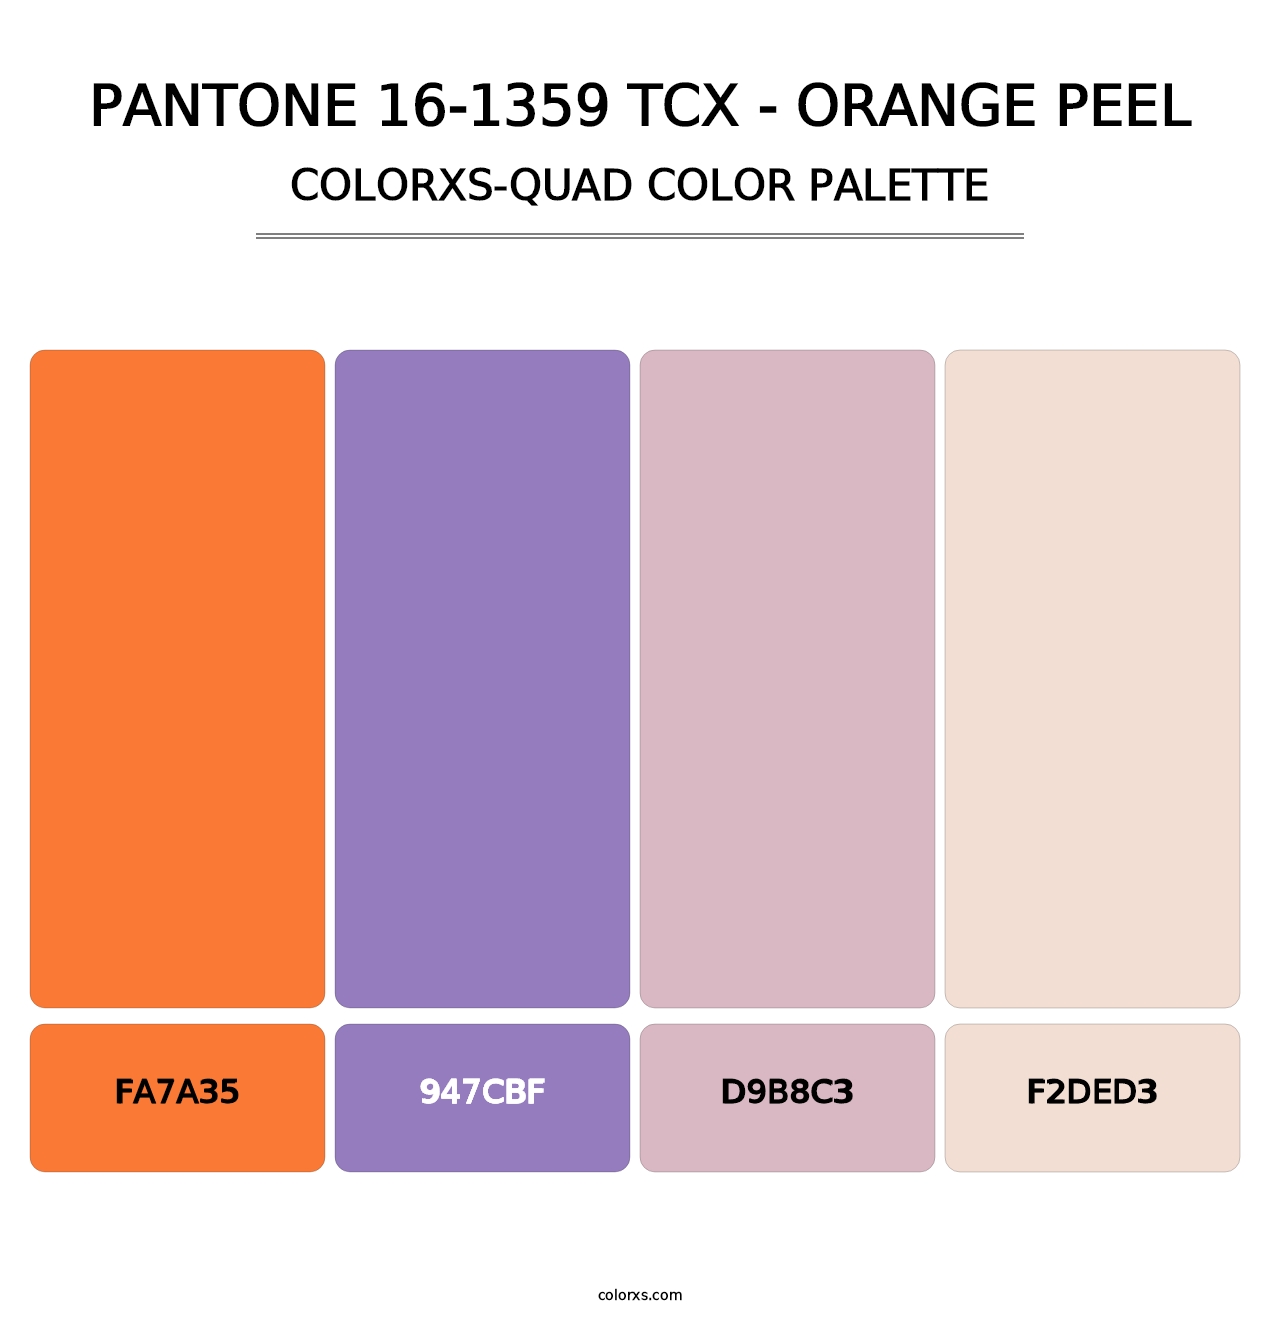 PANTONE 16-1359 TCX - Orange Peel - Colorxs Quad Palette